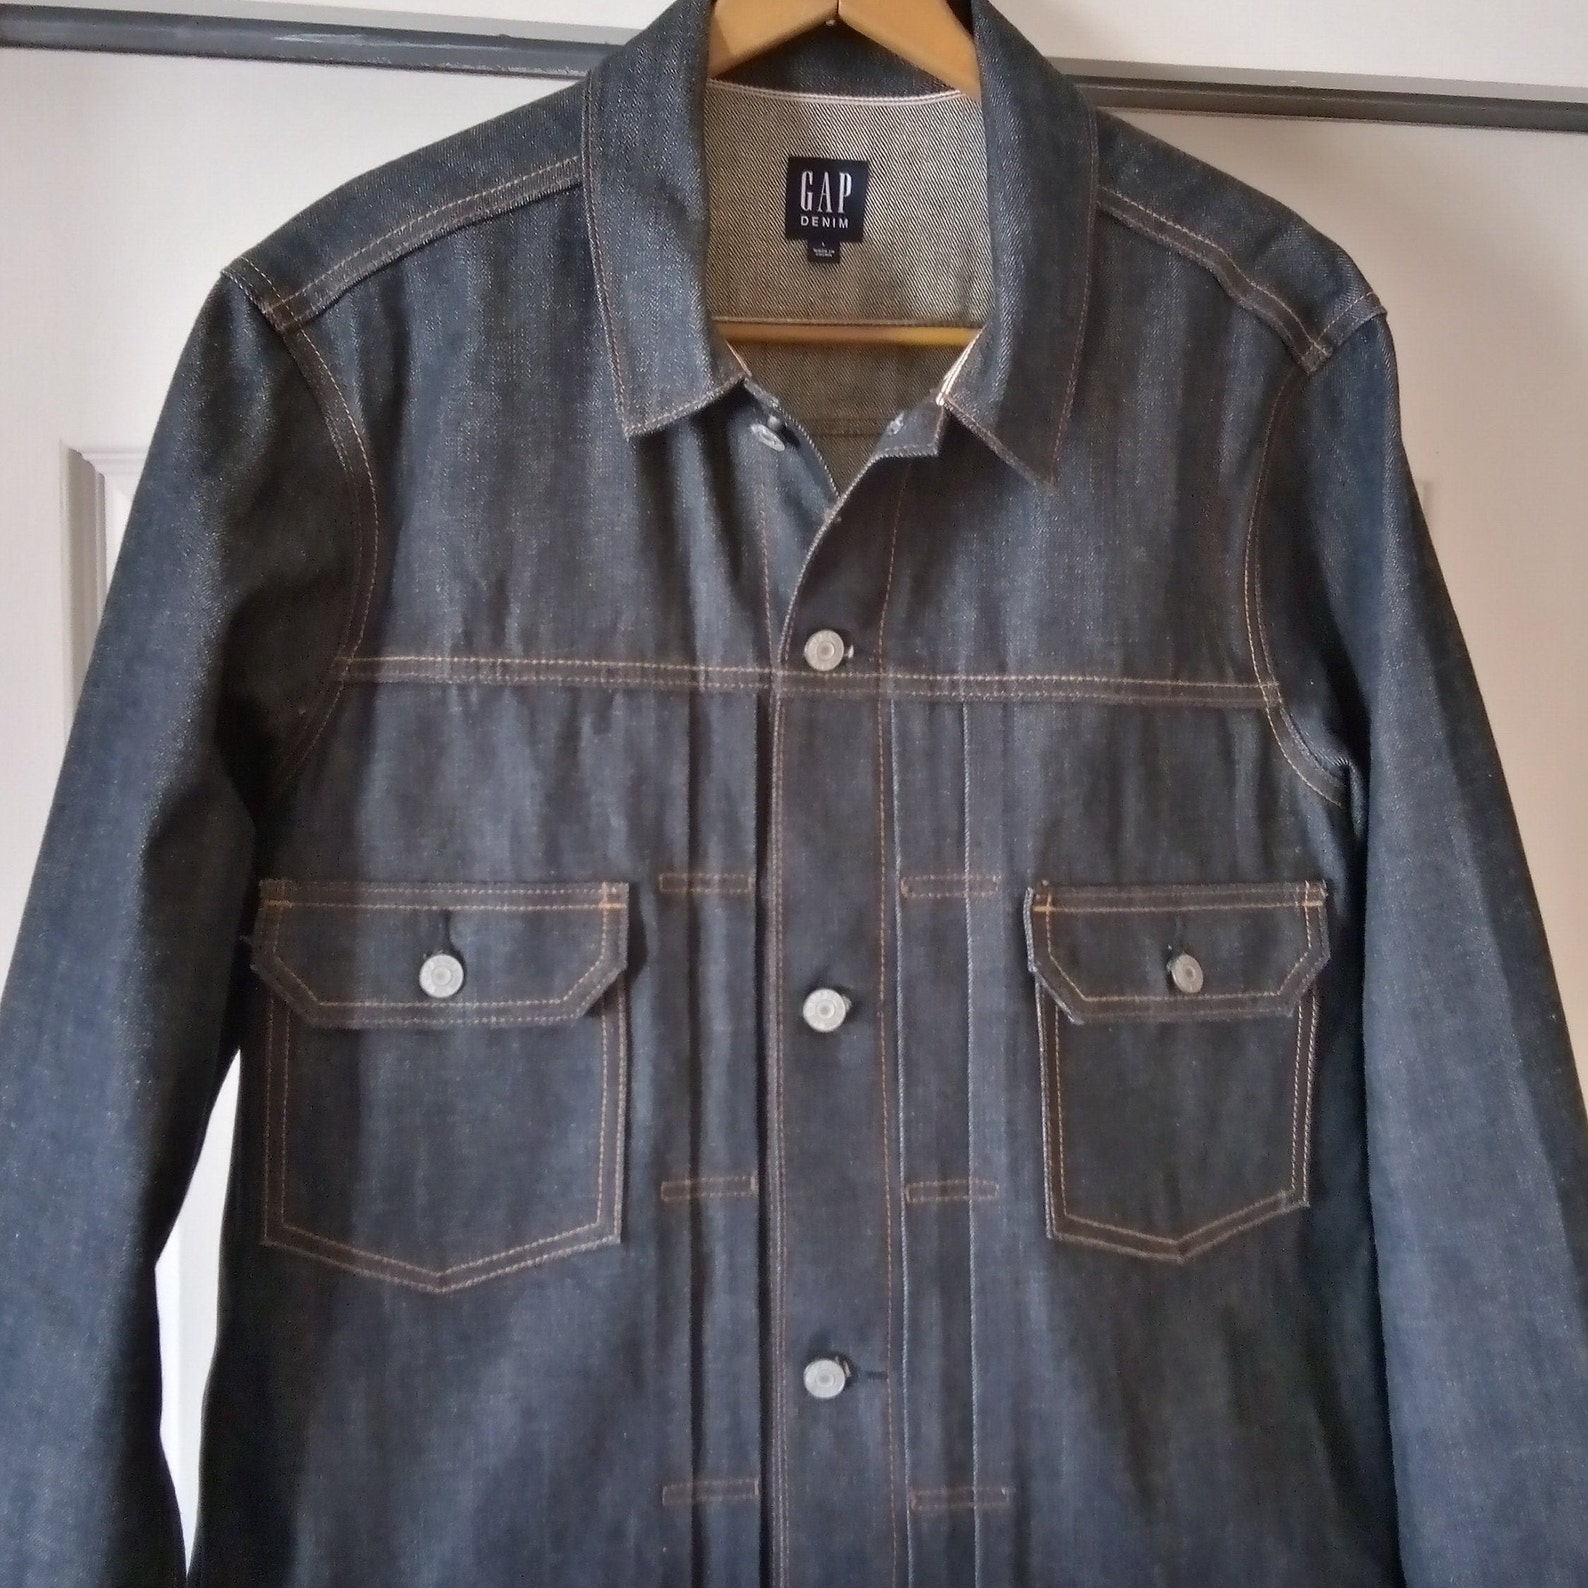 Gap 1969 Japanese Selvedge 1930s Style Double Pleat Jacket | Etsy